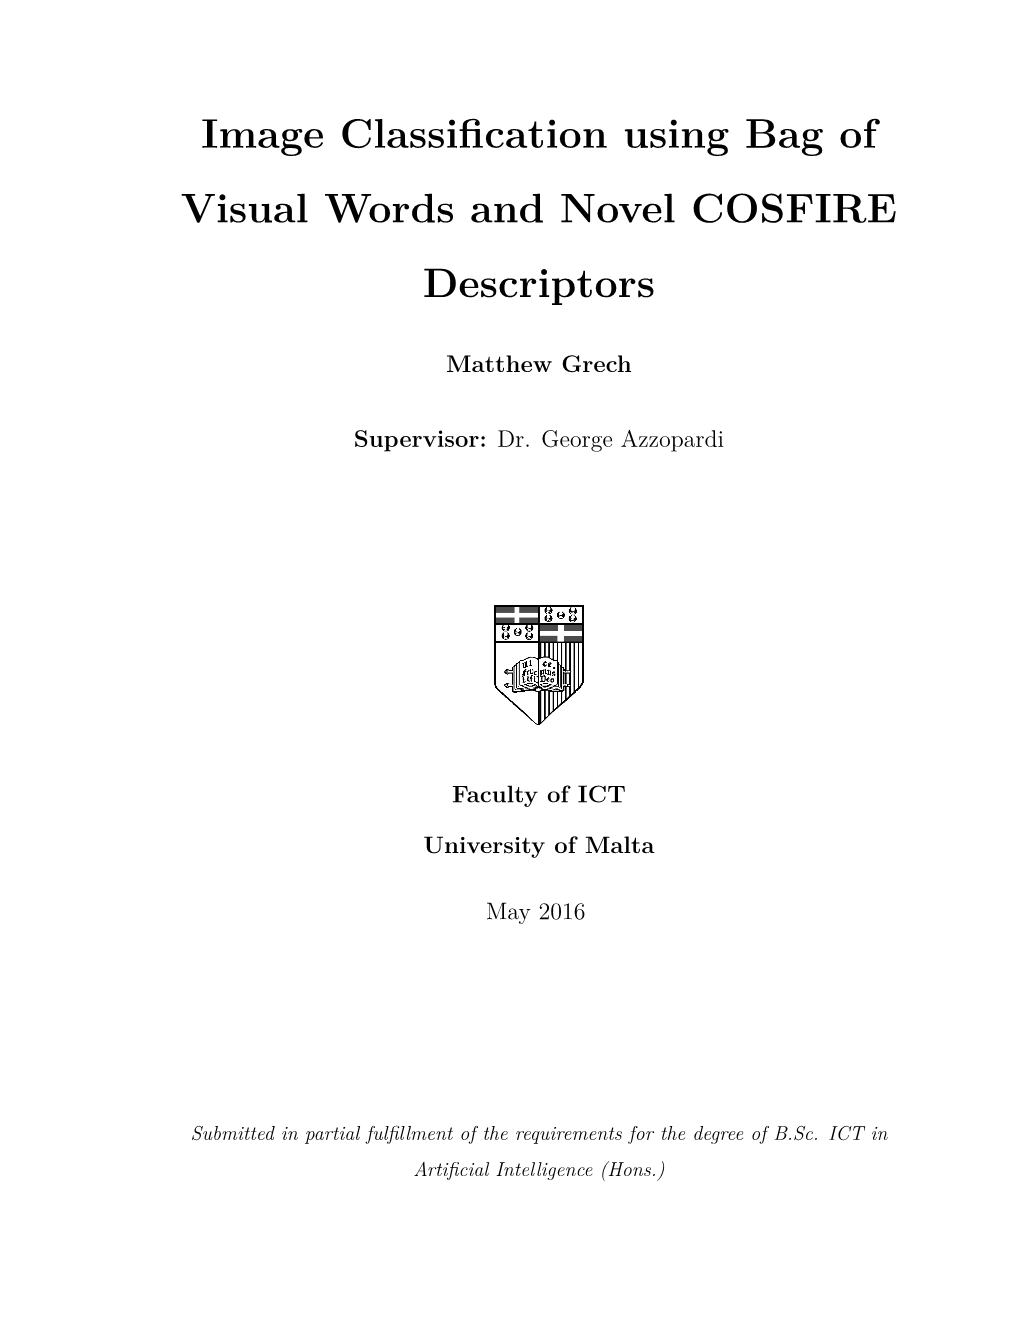 Image Classification Using Bag of Visual Words and Novel COSFIRE Descriptors